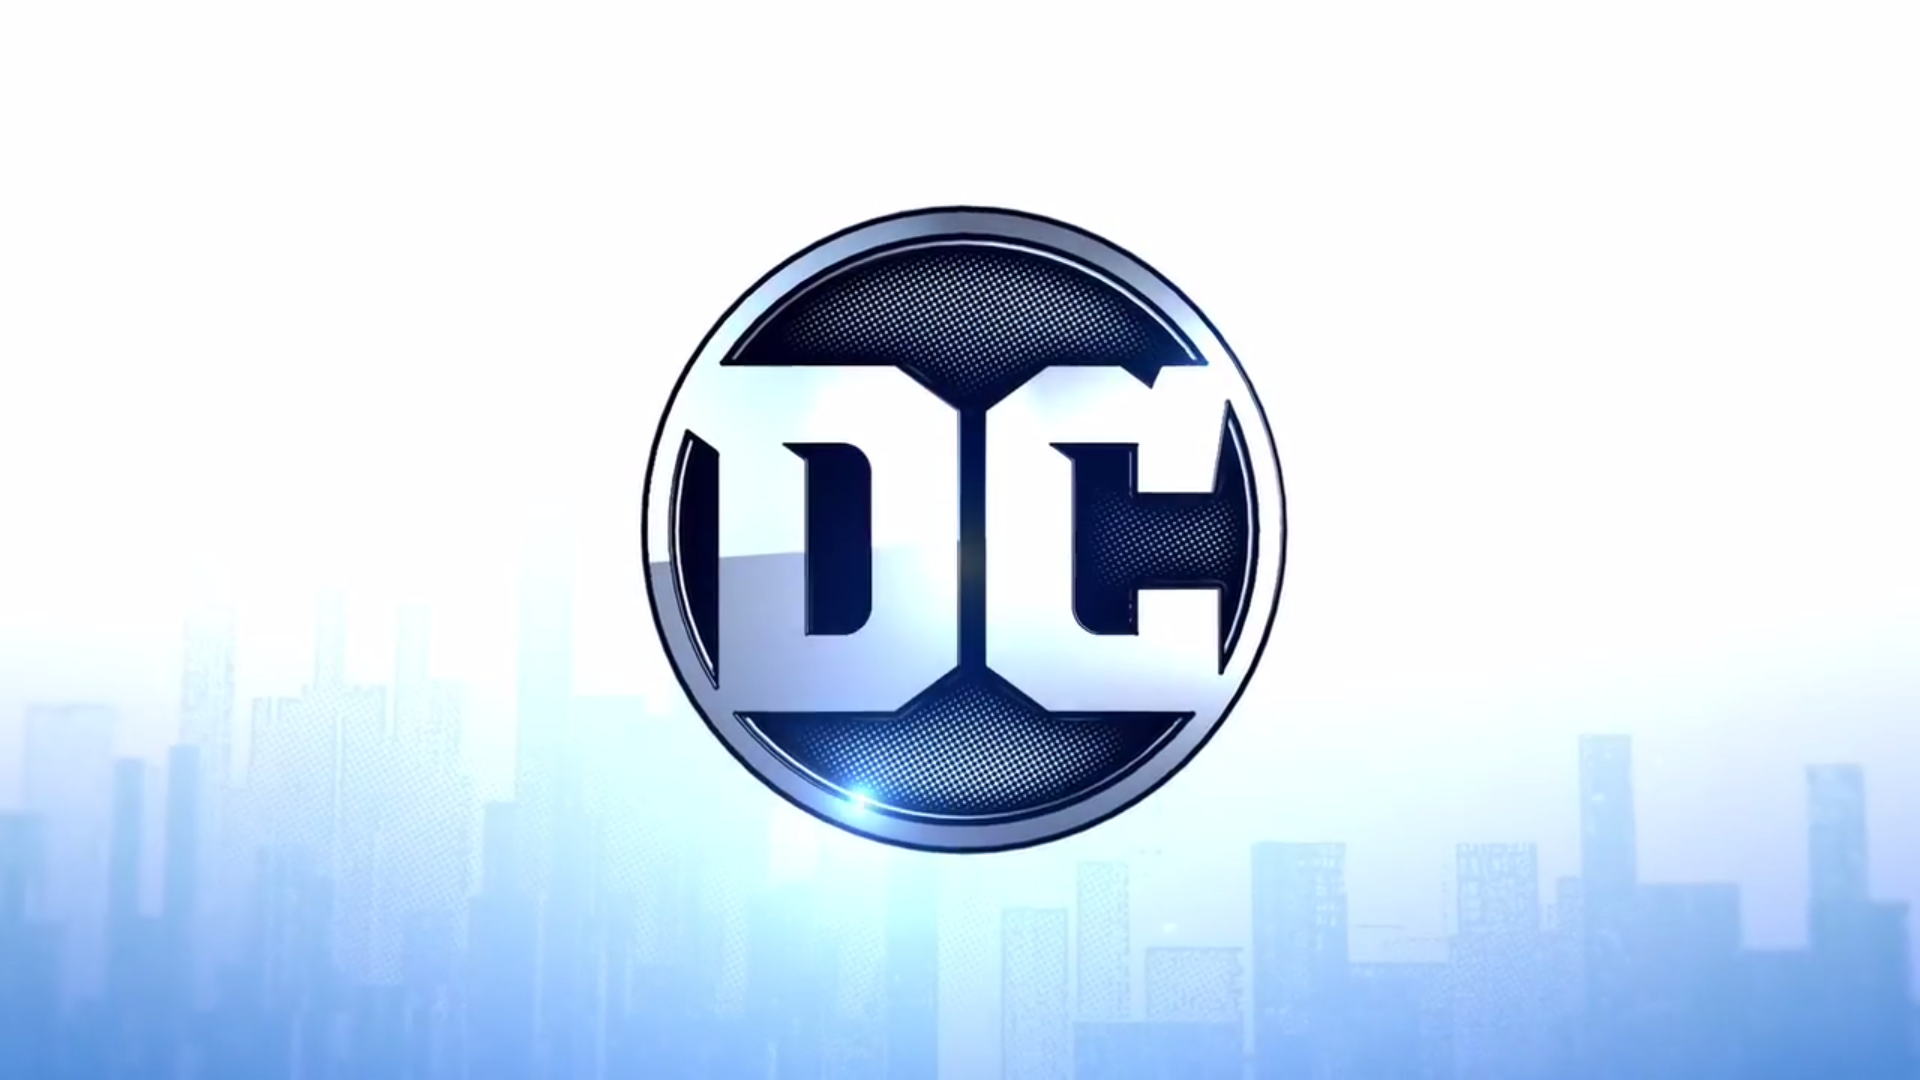 DC Comics 2016 logo.png